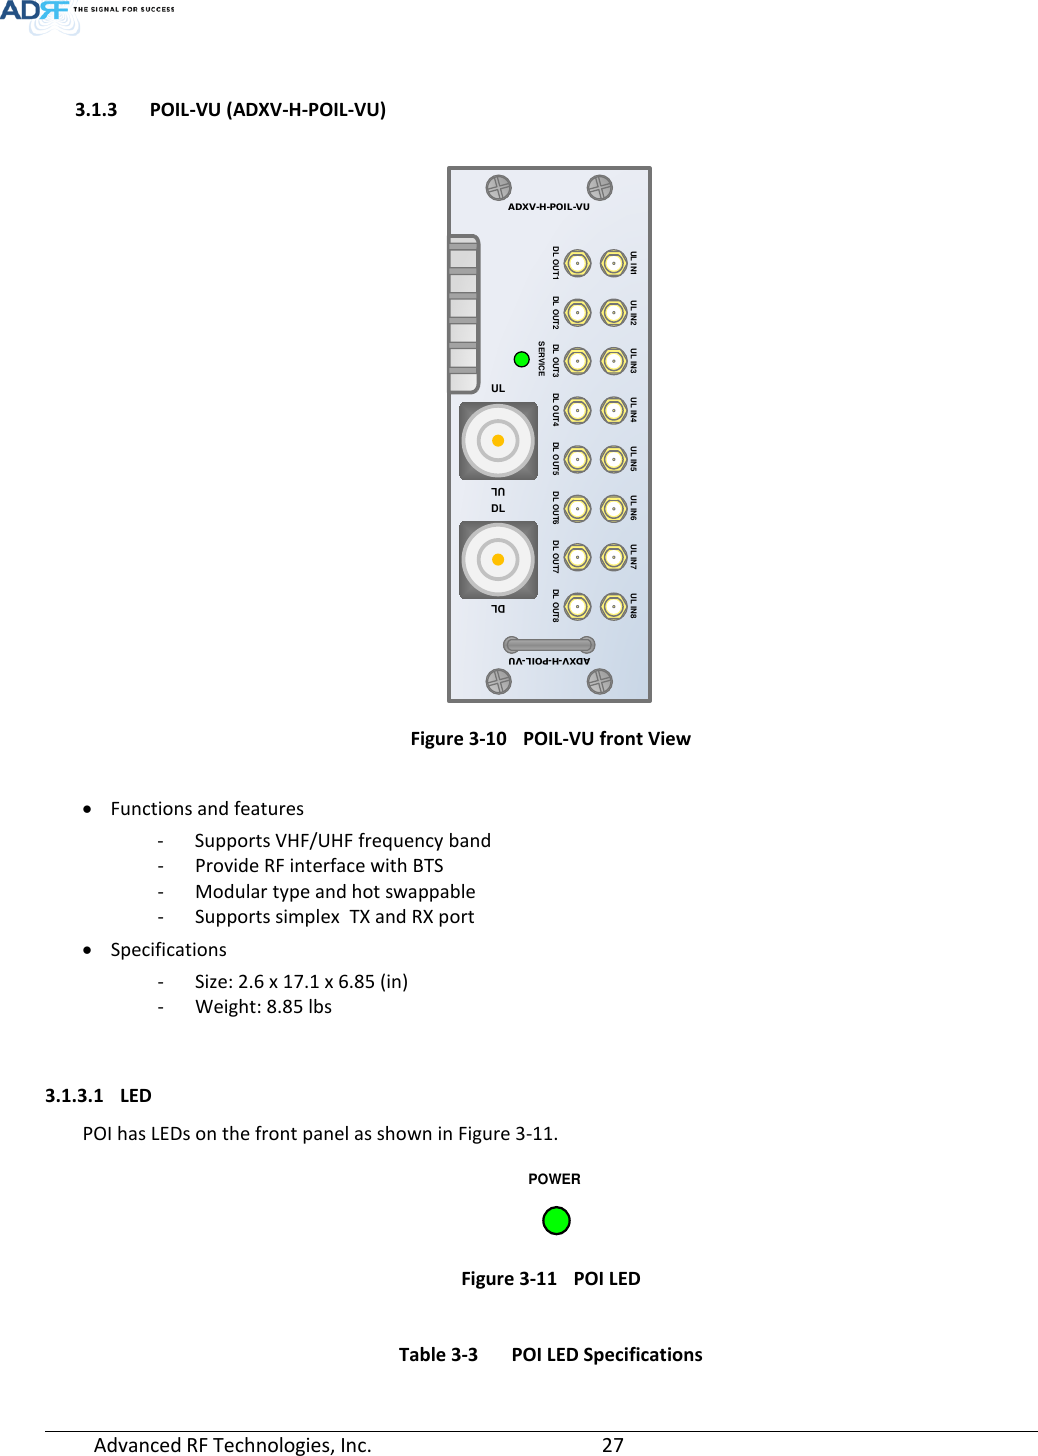 Page 27 of ADRF KOREA ADXV-R-78P-NA DAS (Distributed Antenna System) User Manual ADXV DAS